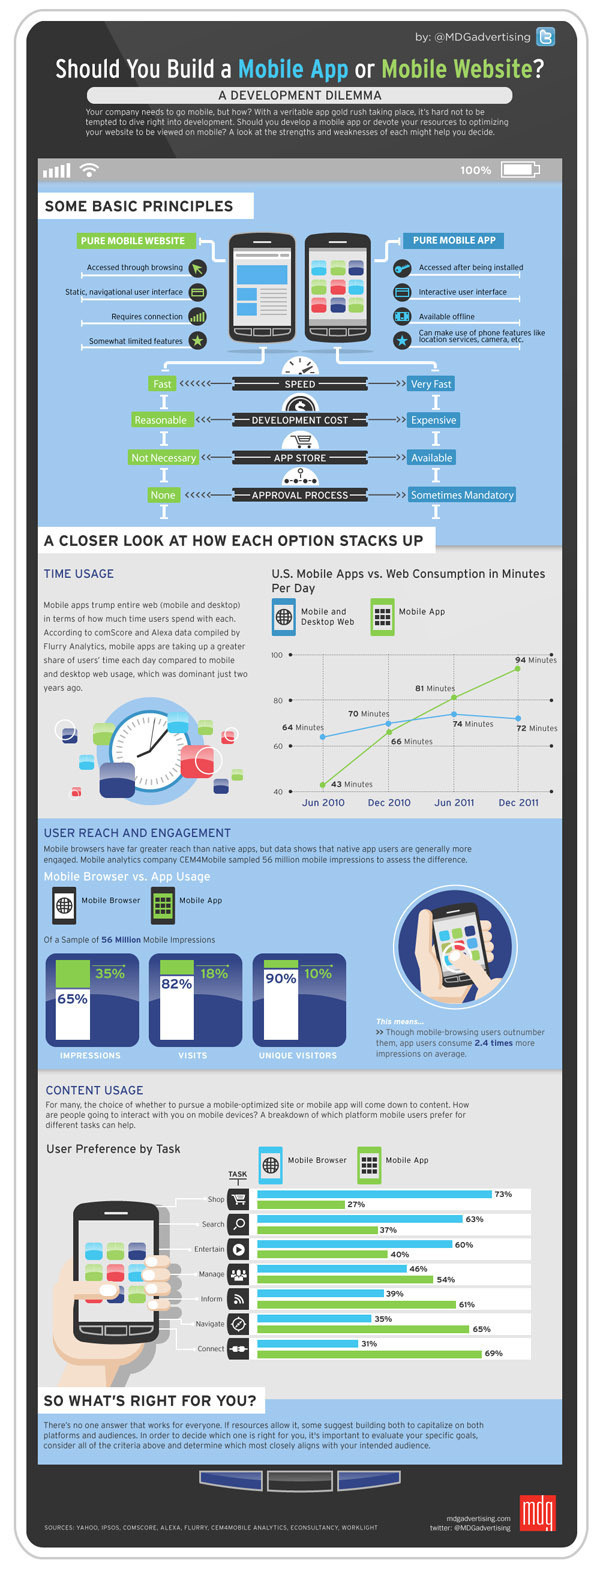 Infographic design idea #139: Should You Build a Mobile App or Mobile Website? [Infographic] #infographic